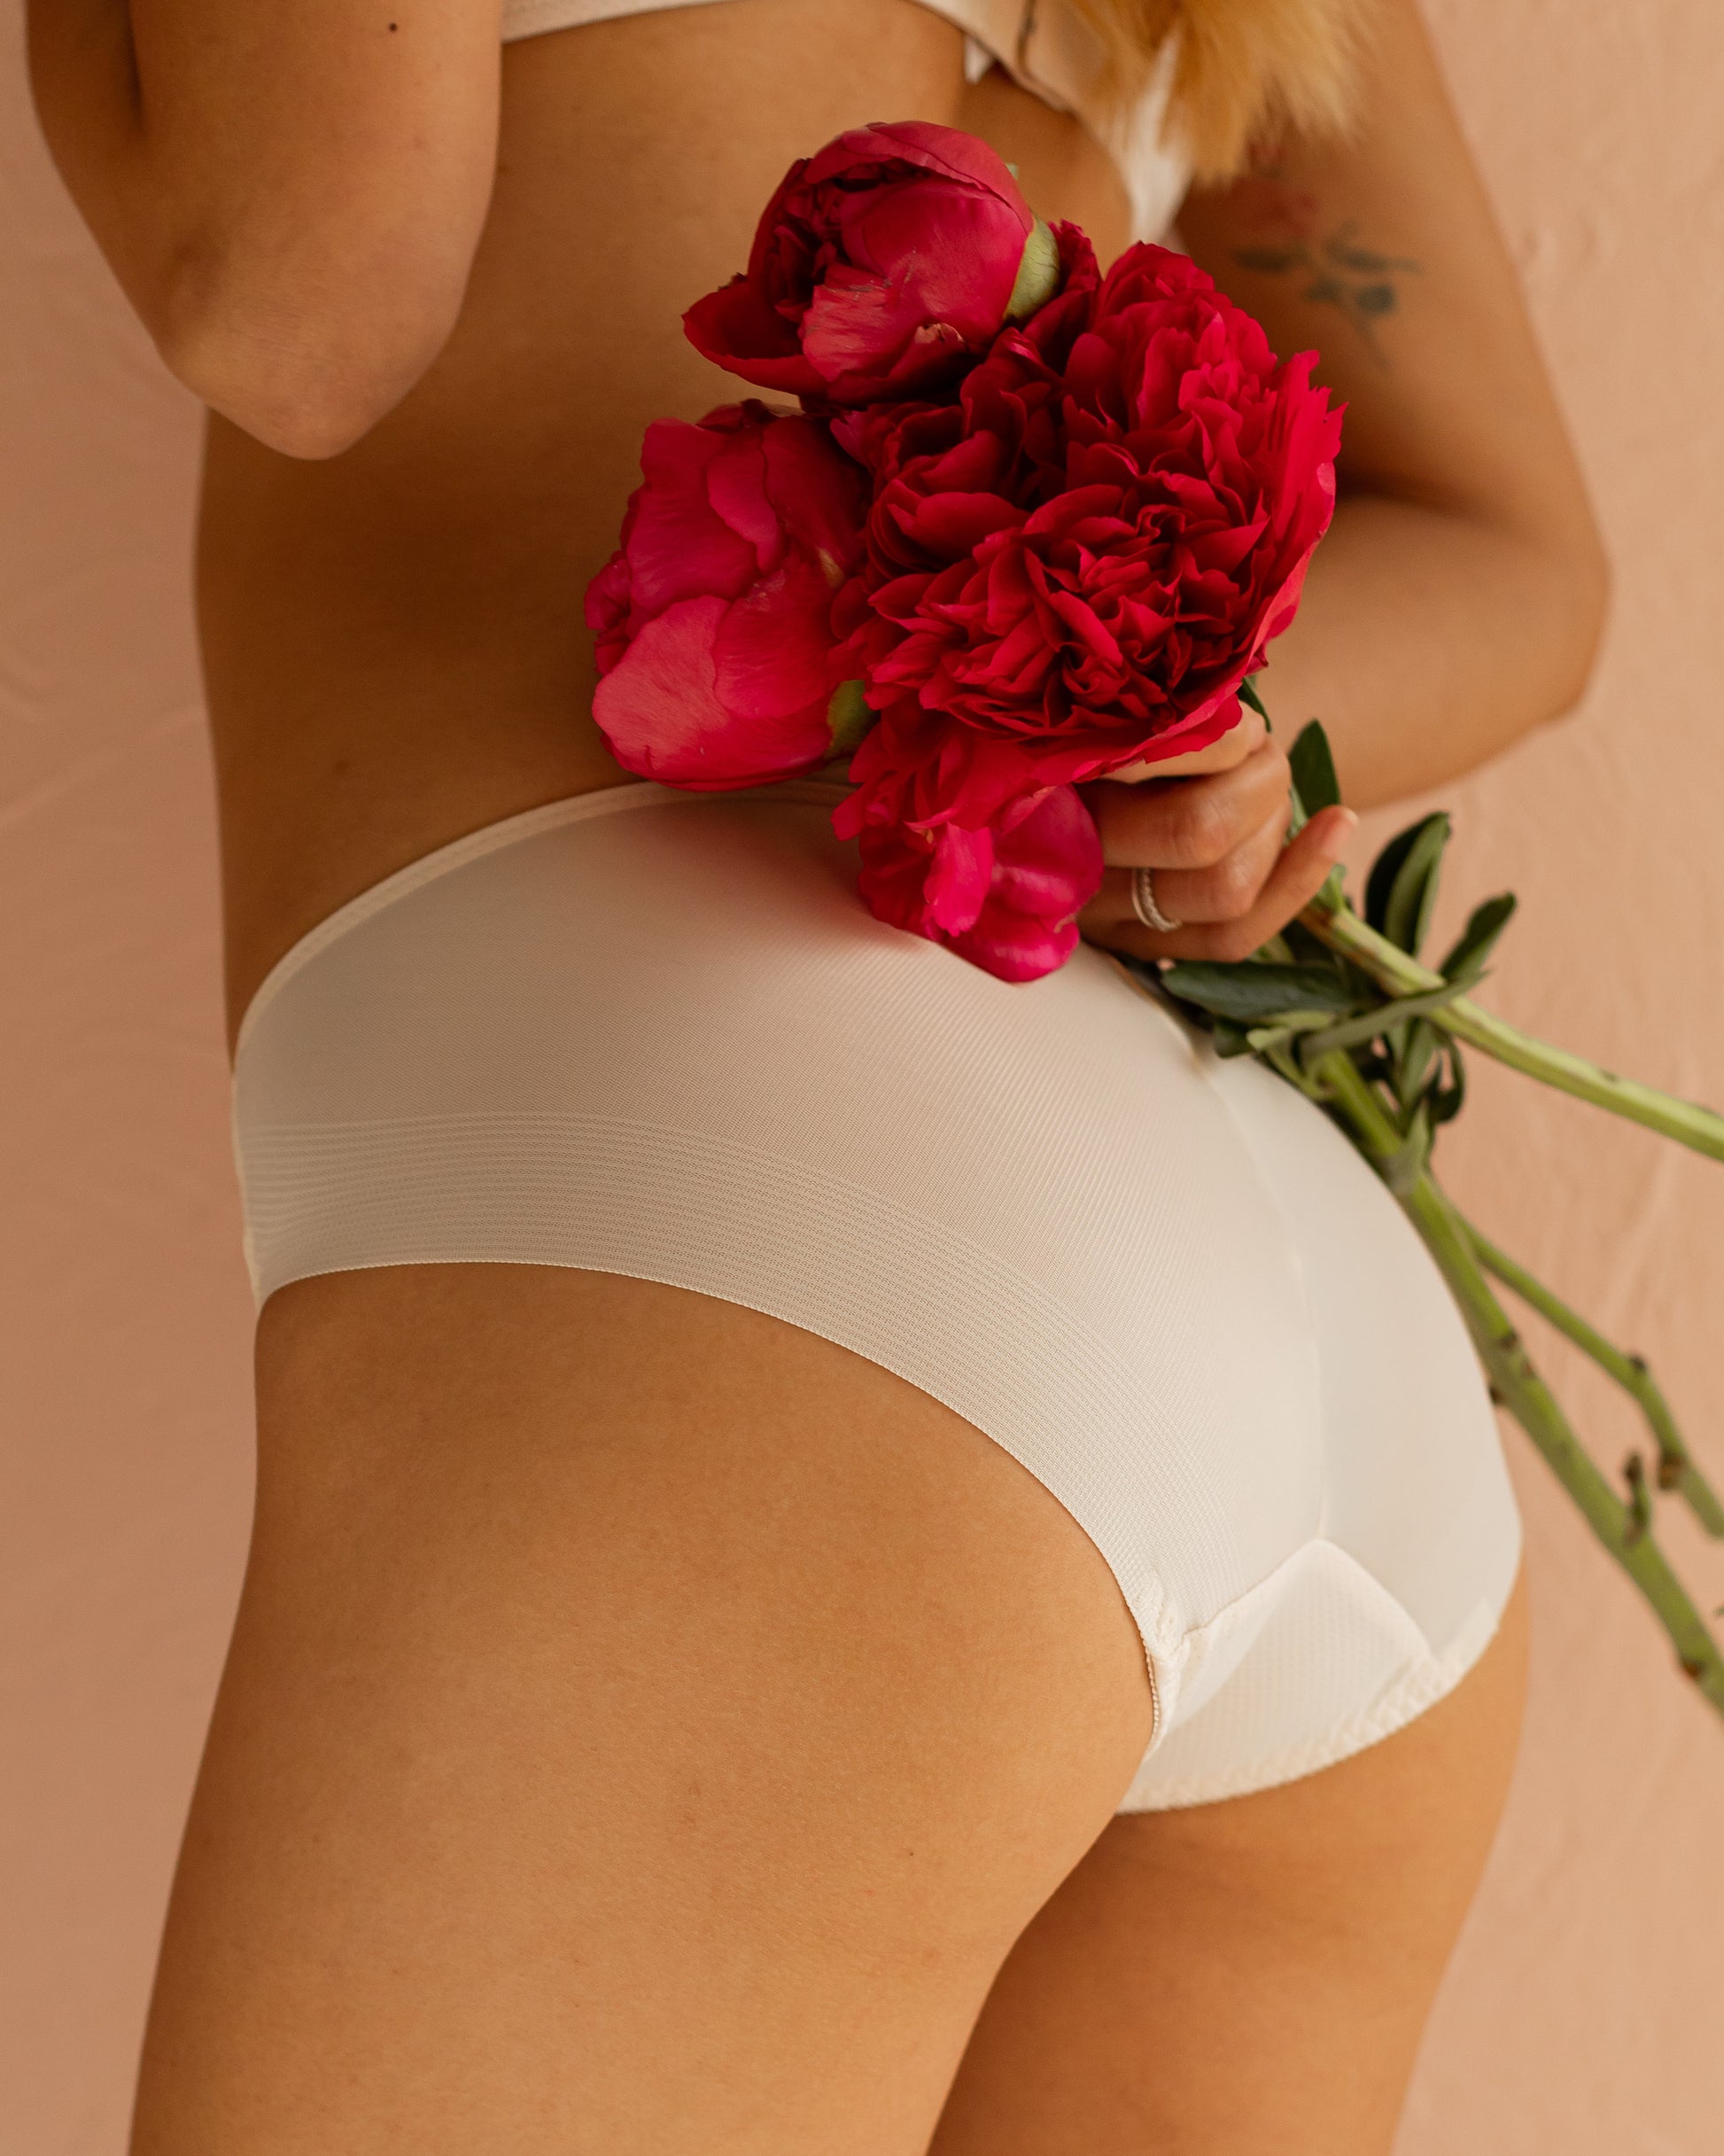 Basic Mesh No Show Bikini – Ameris Bloomer